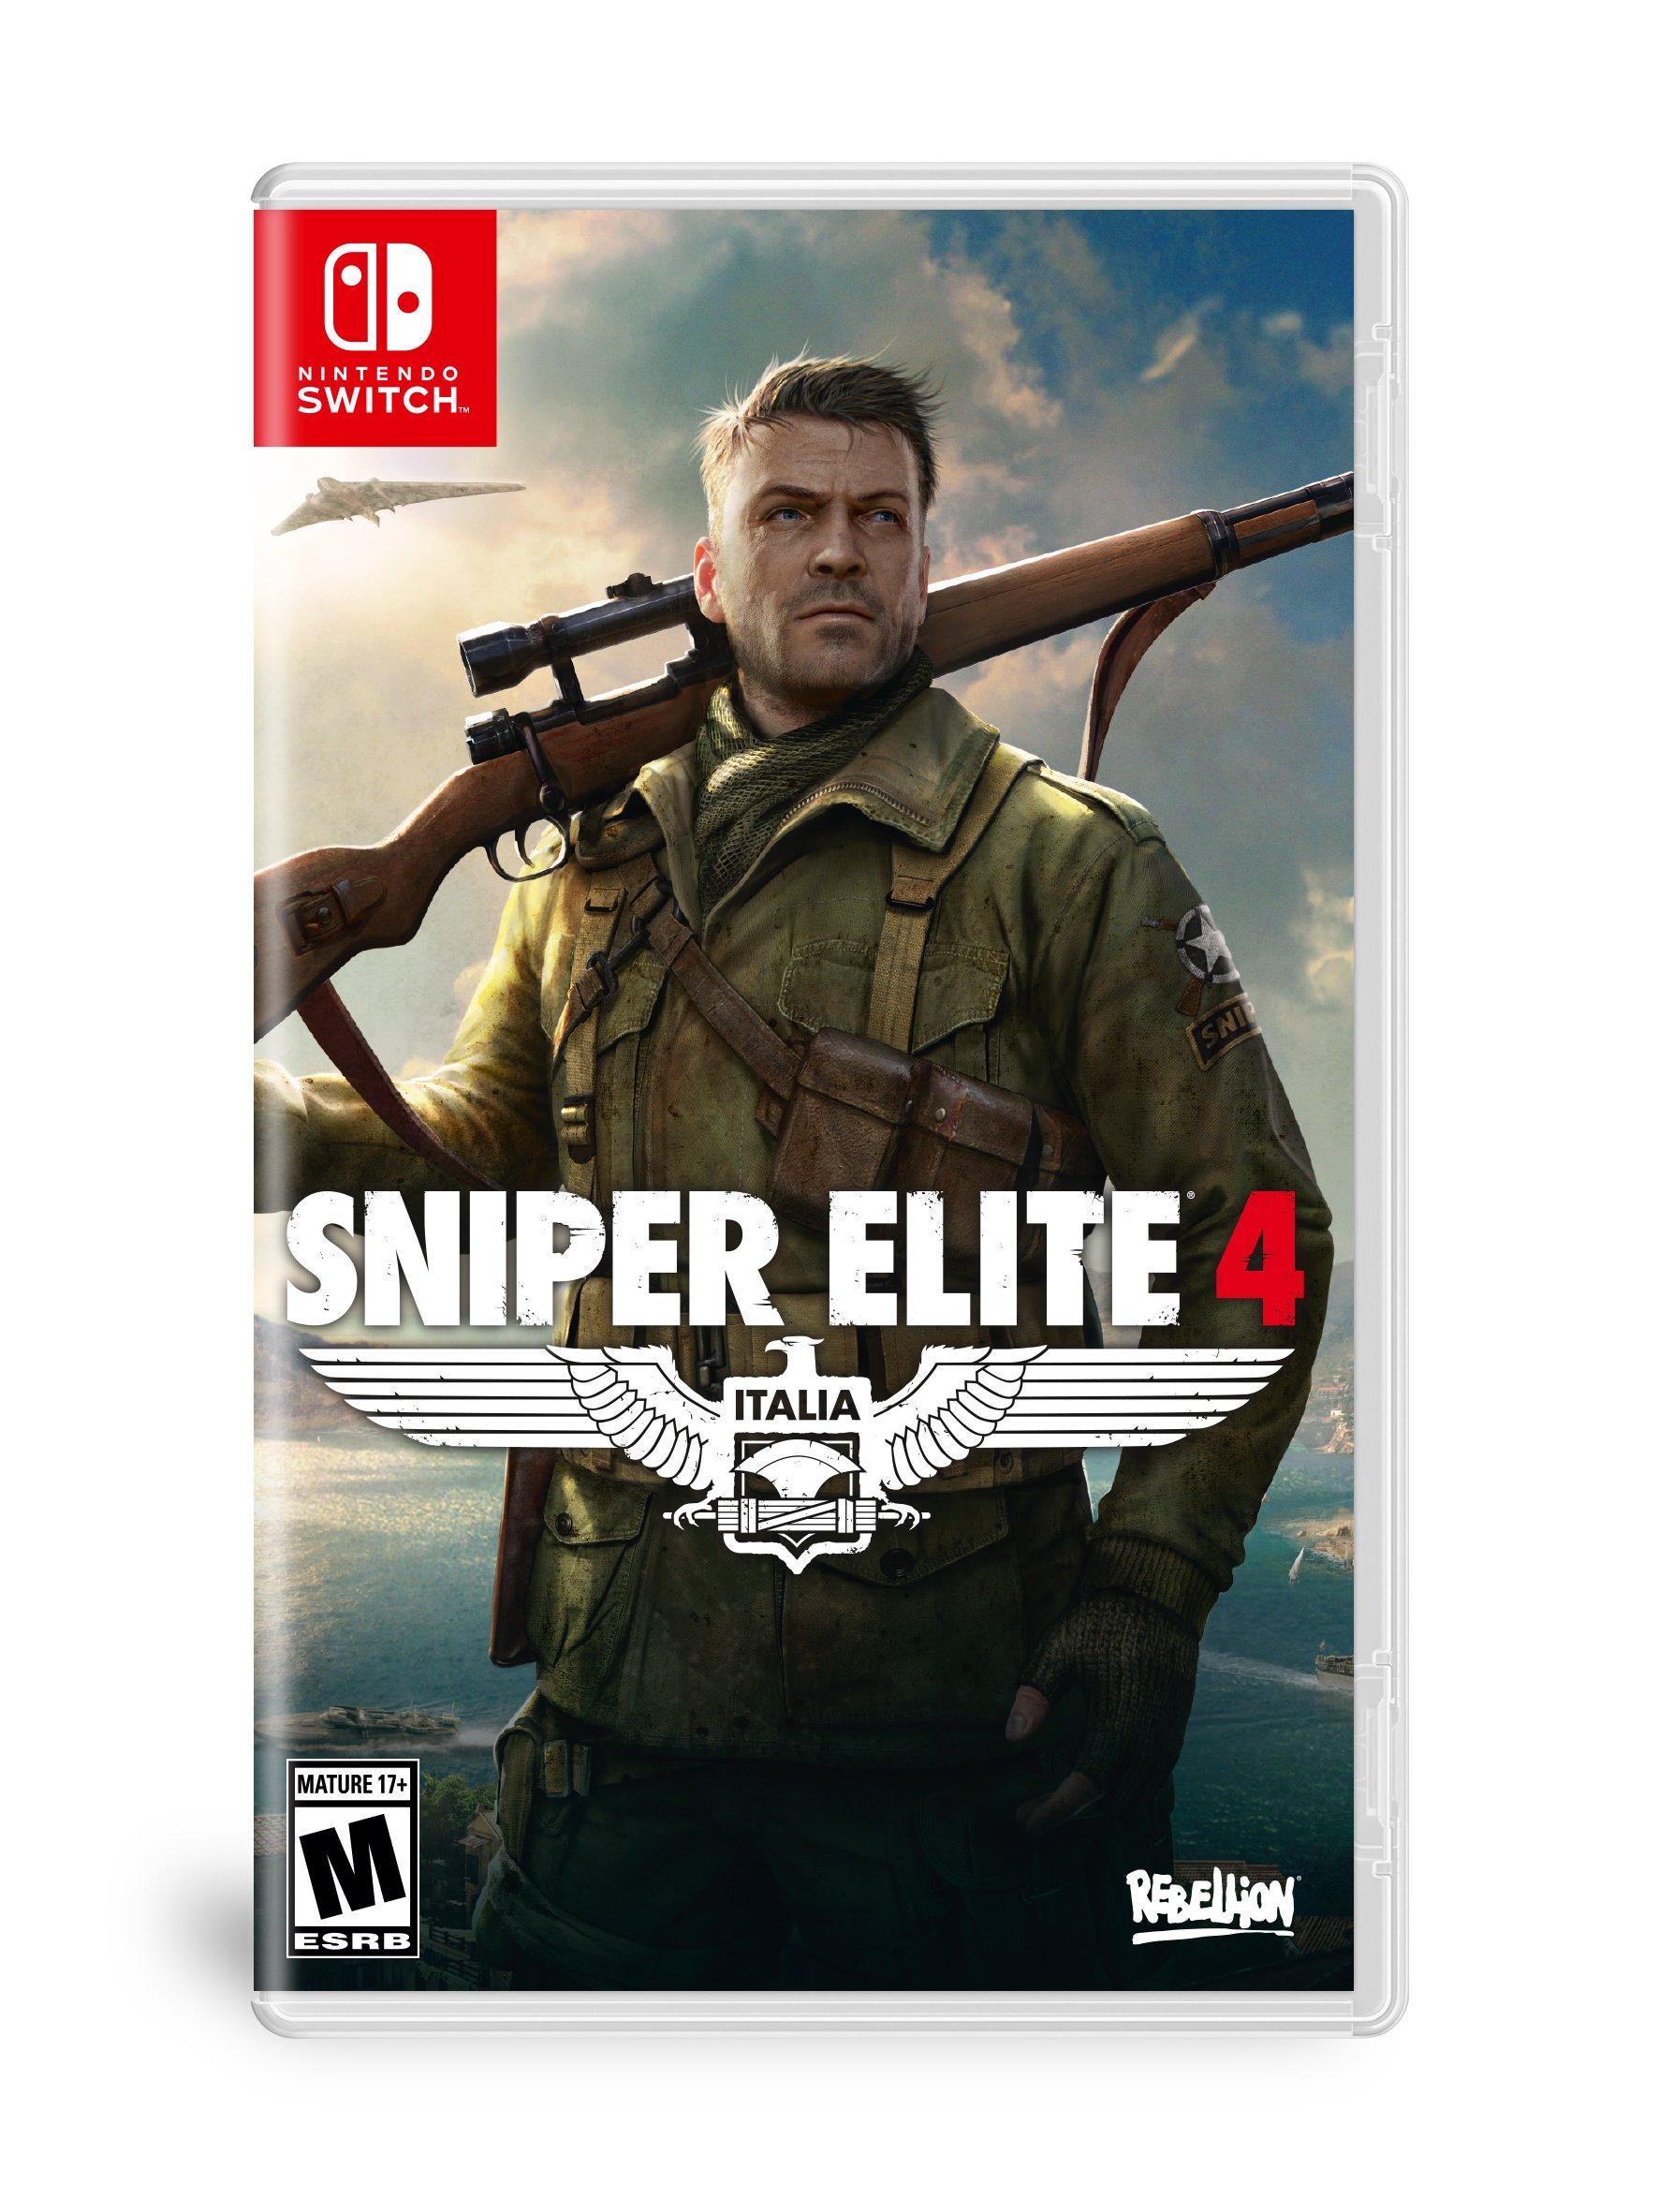 sniper elite 4 nintendo switch release date